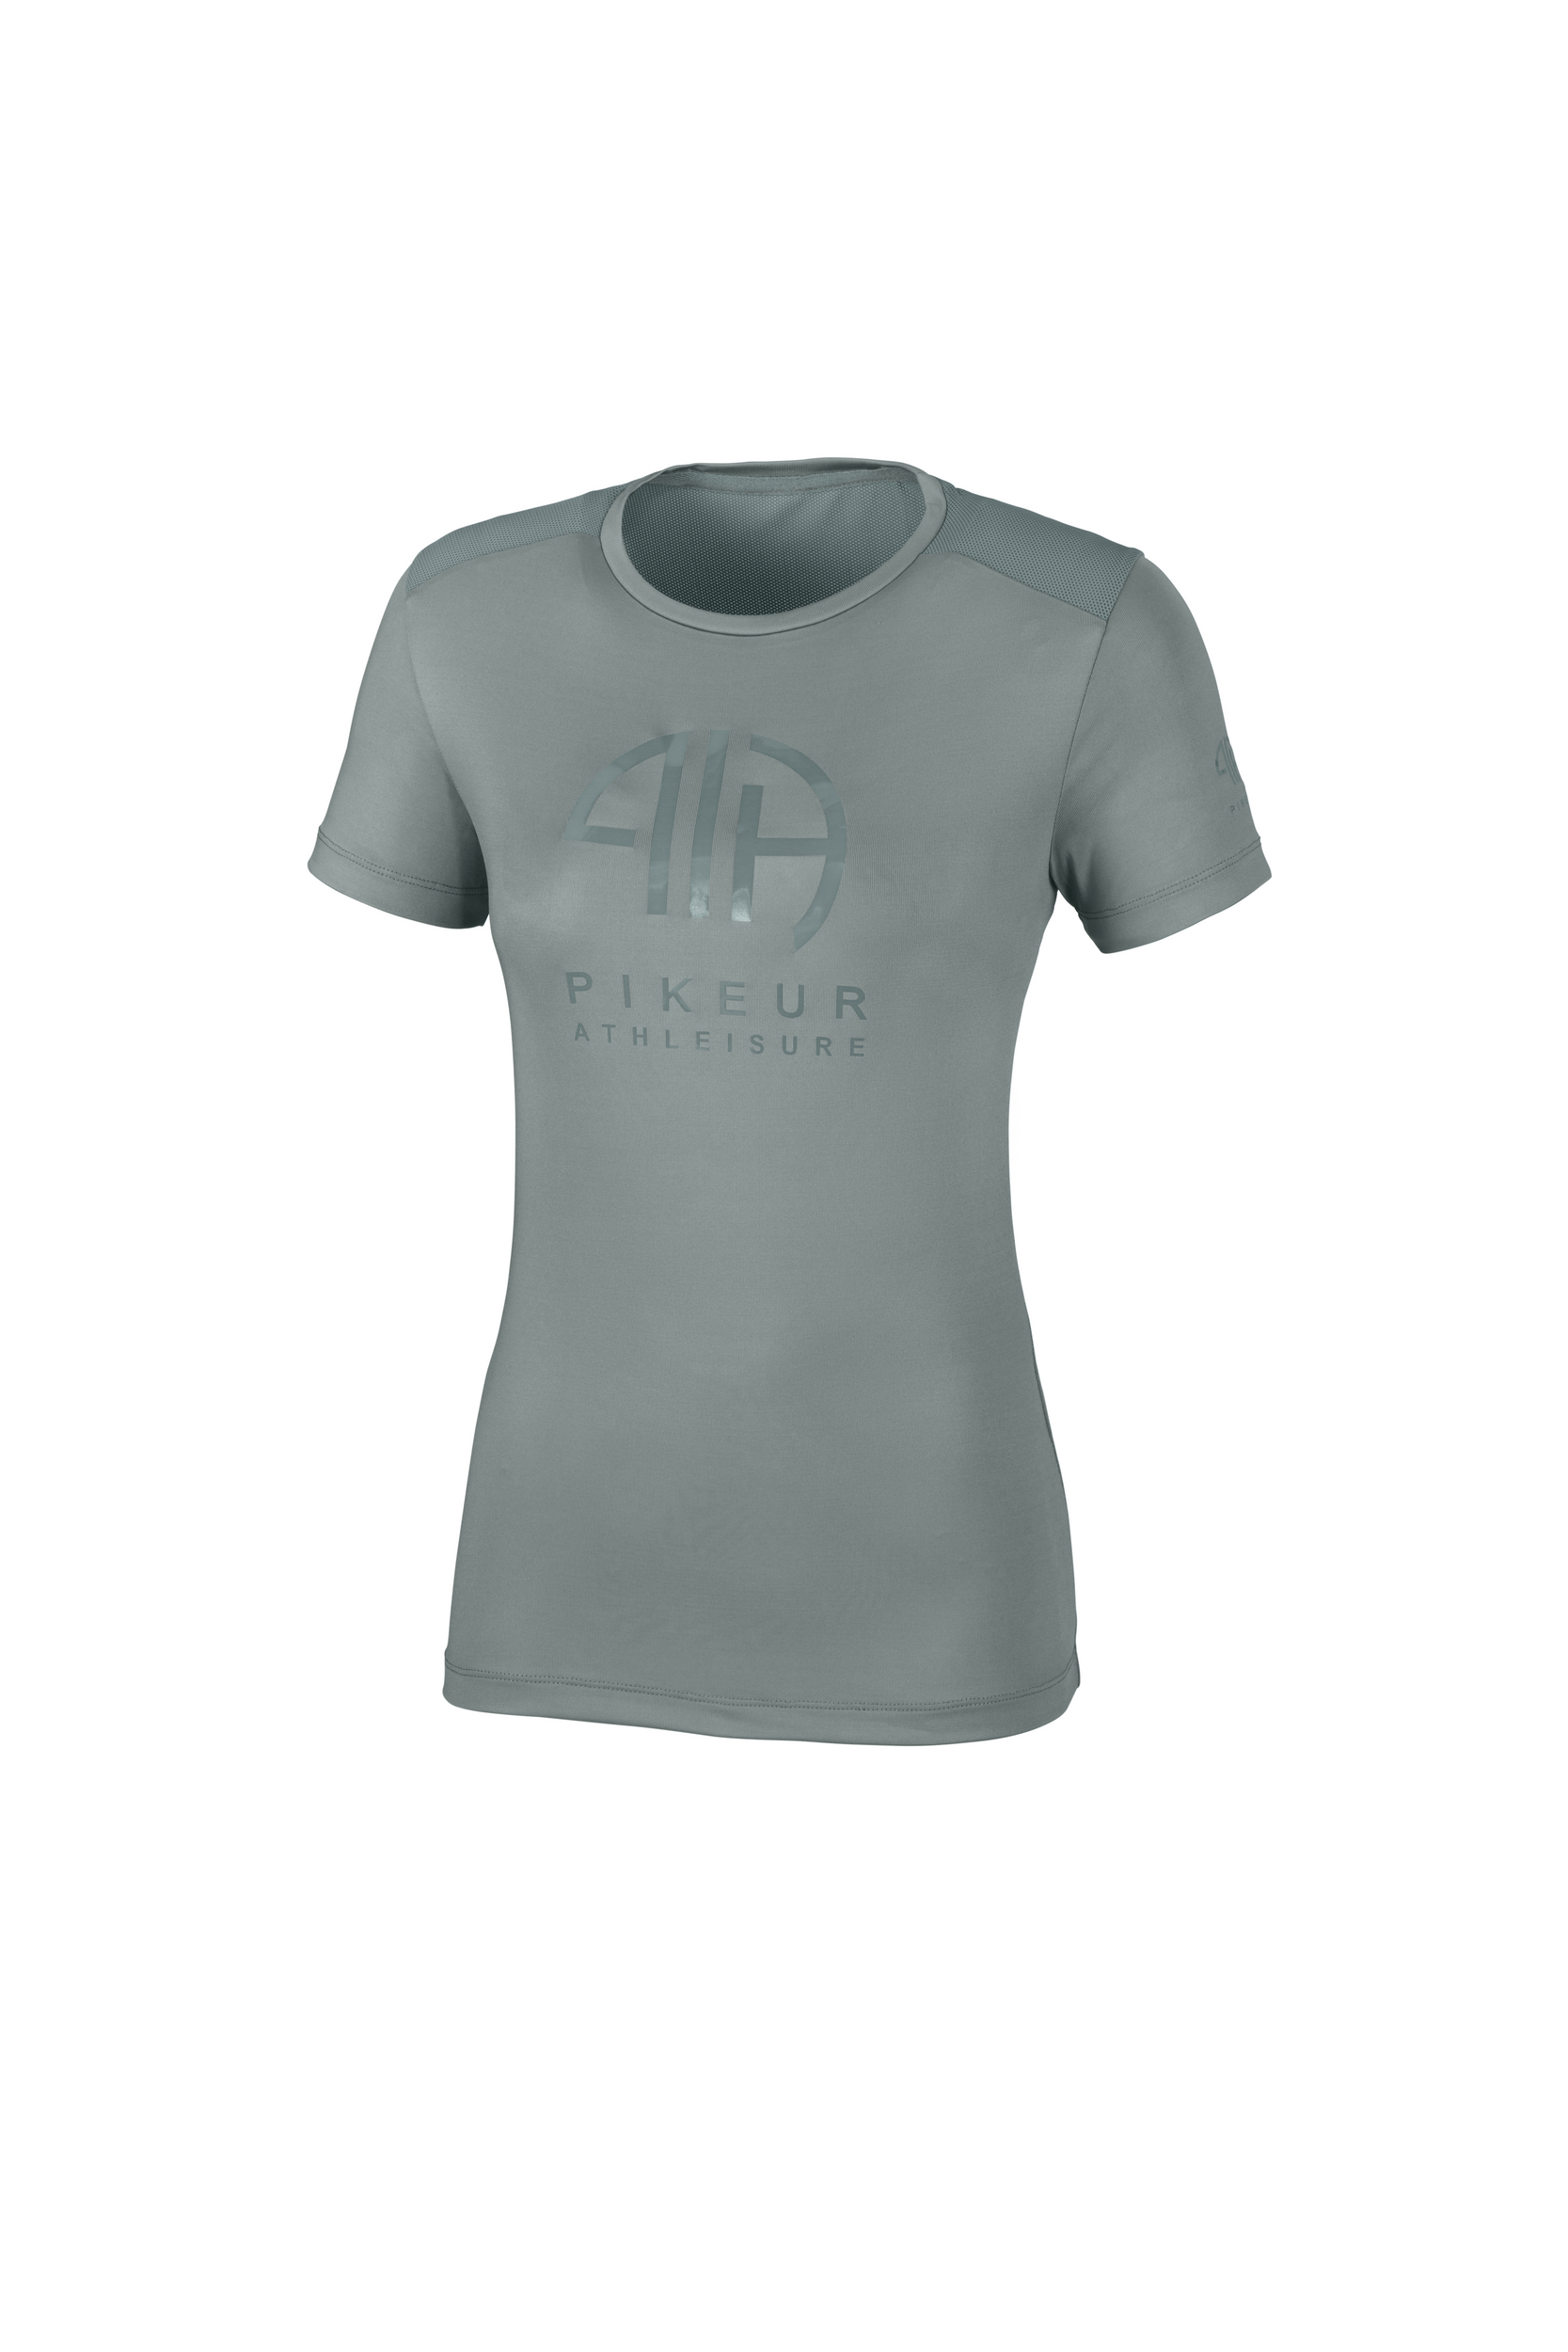 PIKEUR modisches Damen Funktions T-Shirt Athleisure FS24 - jade - 36